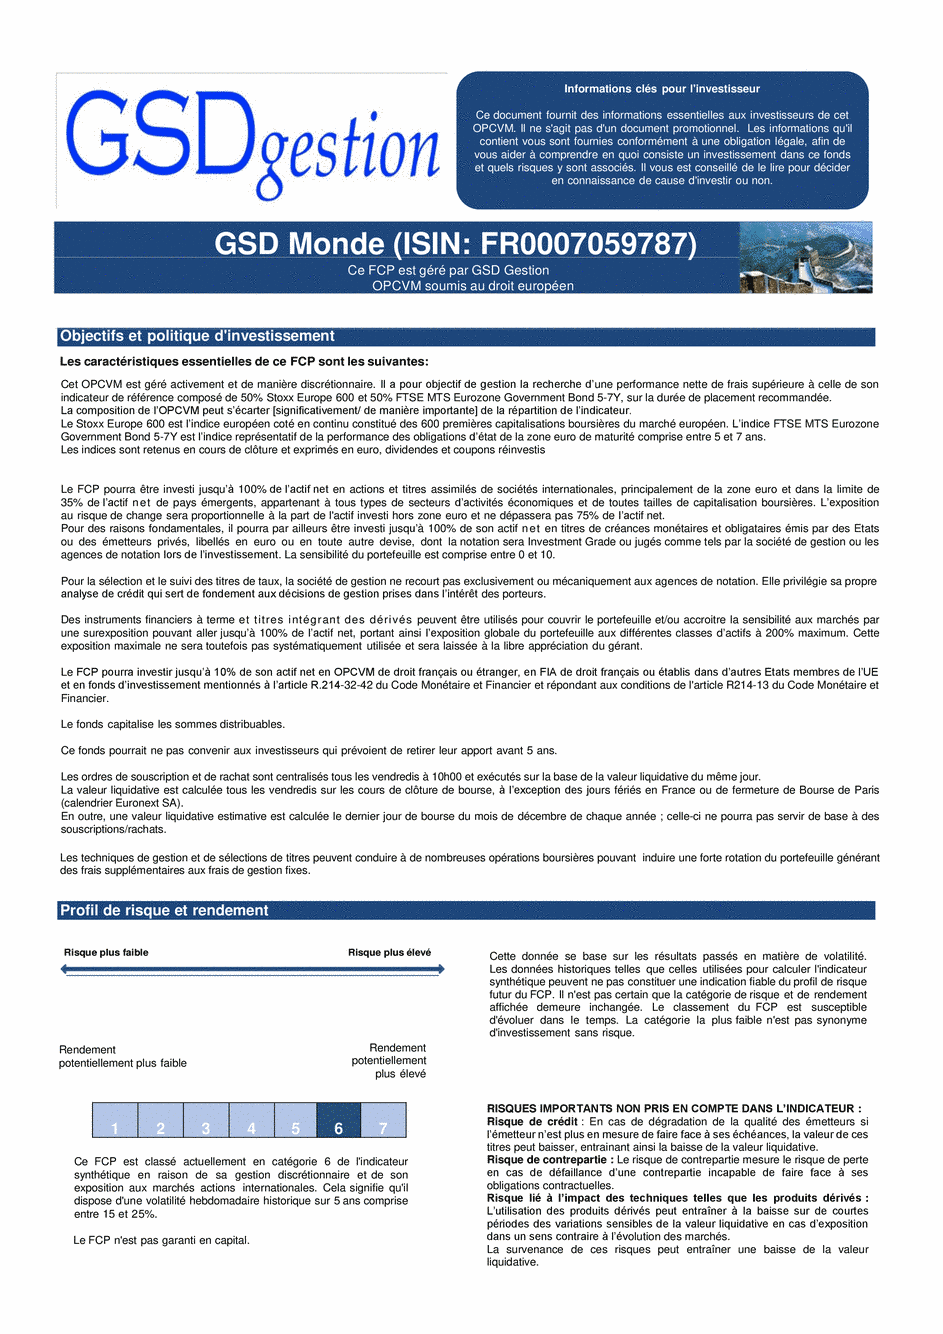 DICI-Prospectus GSD Monde - 13/01/2021 - Français